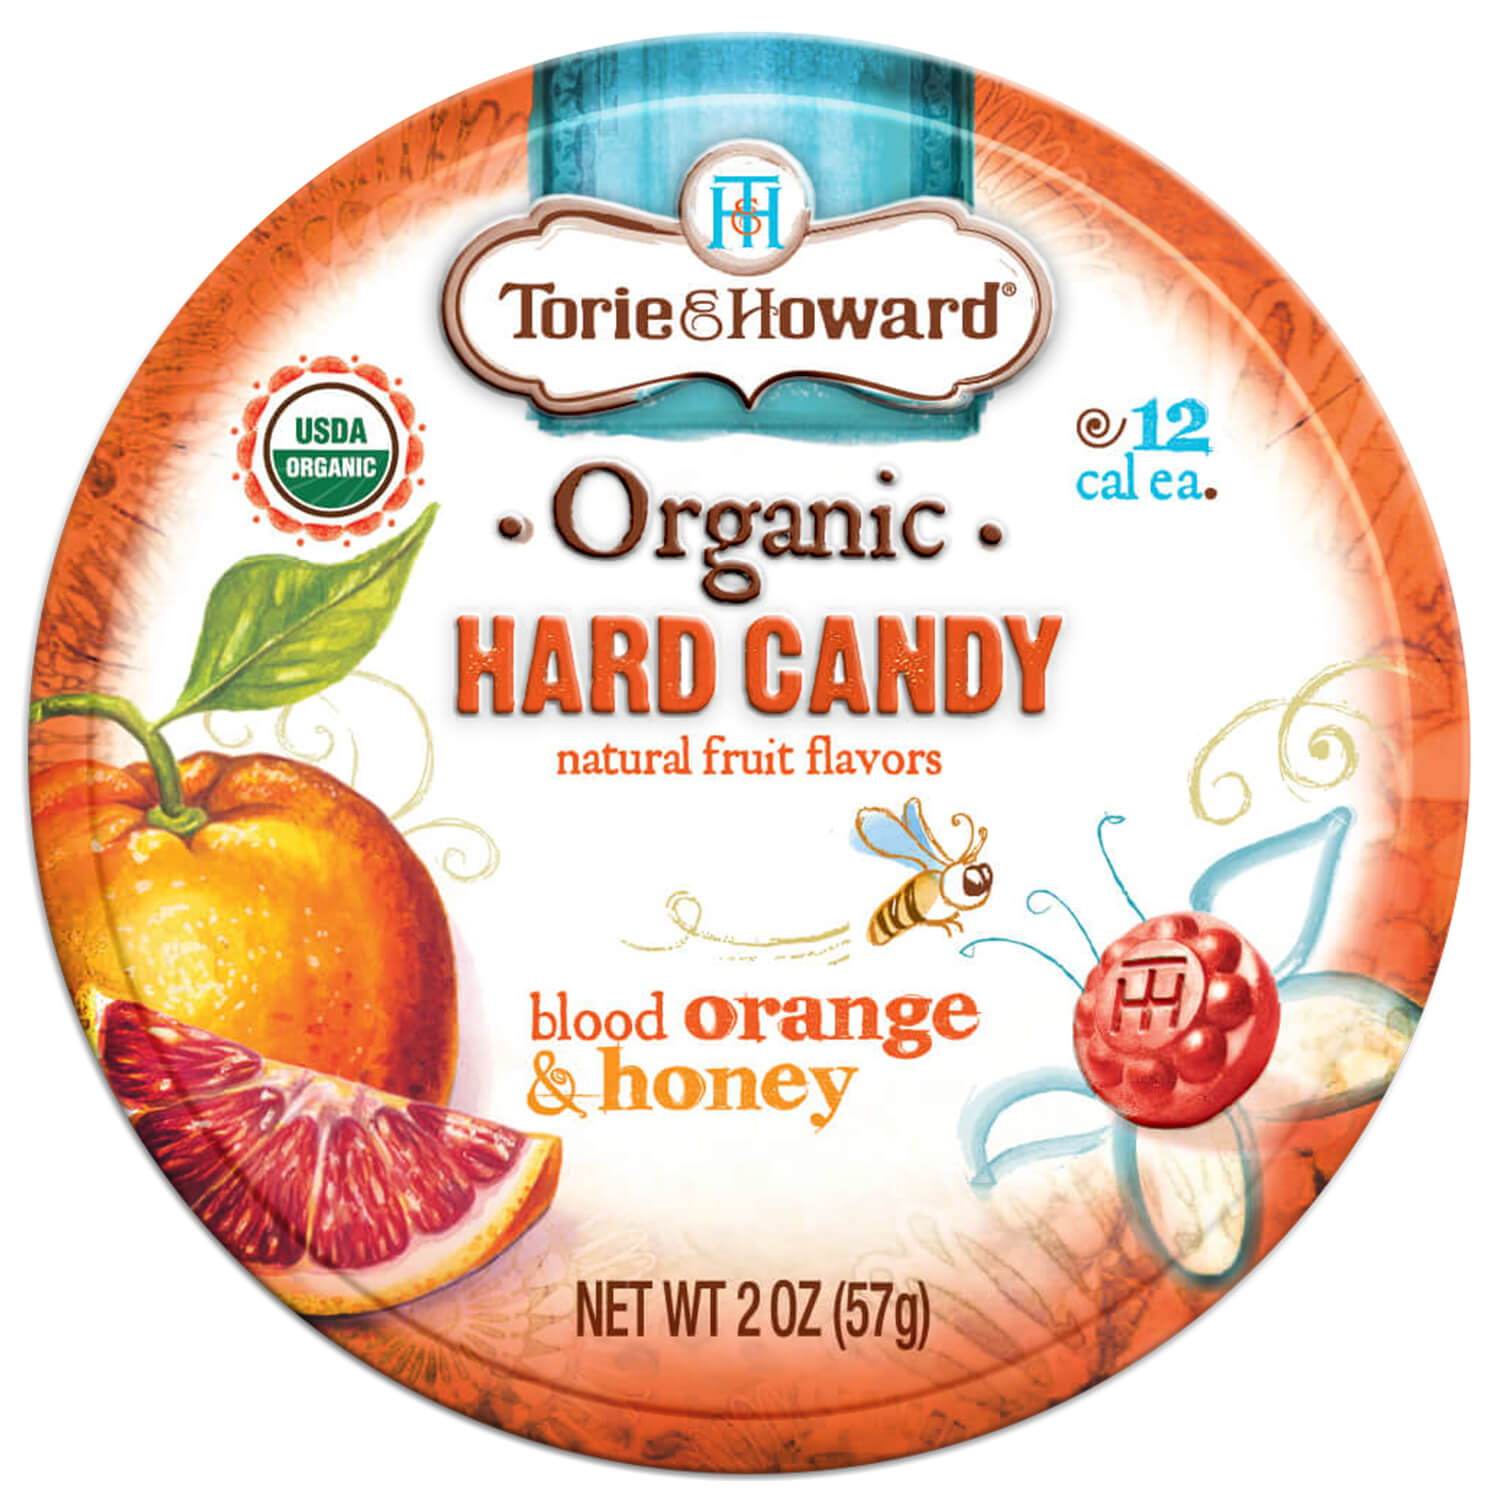 Torie & Howard Blood Orange and Honey Organic Hard Candy Tins 2oz Tins